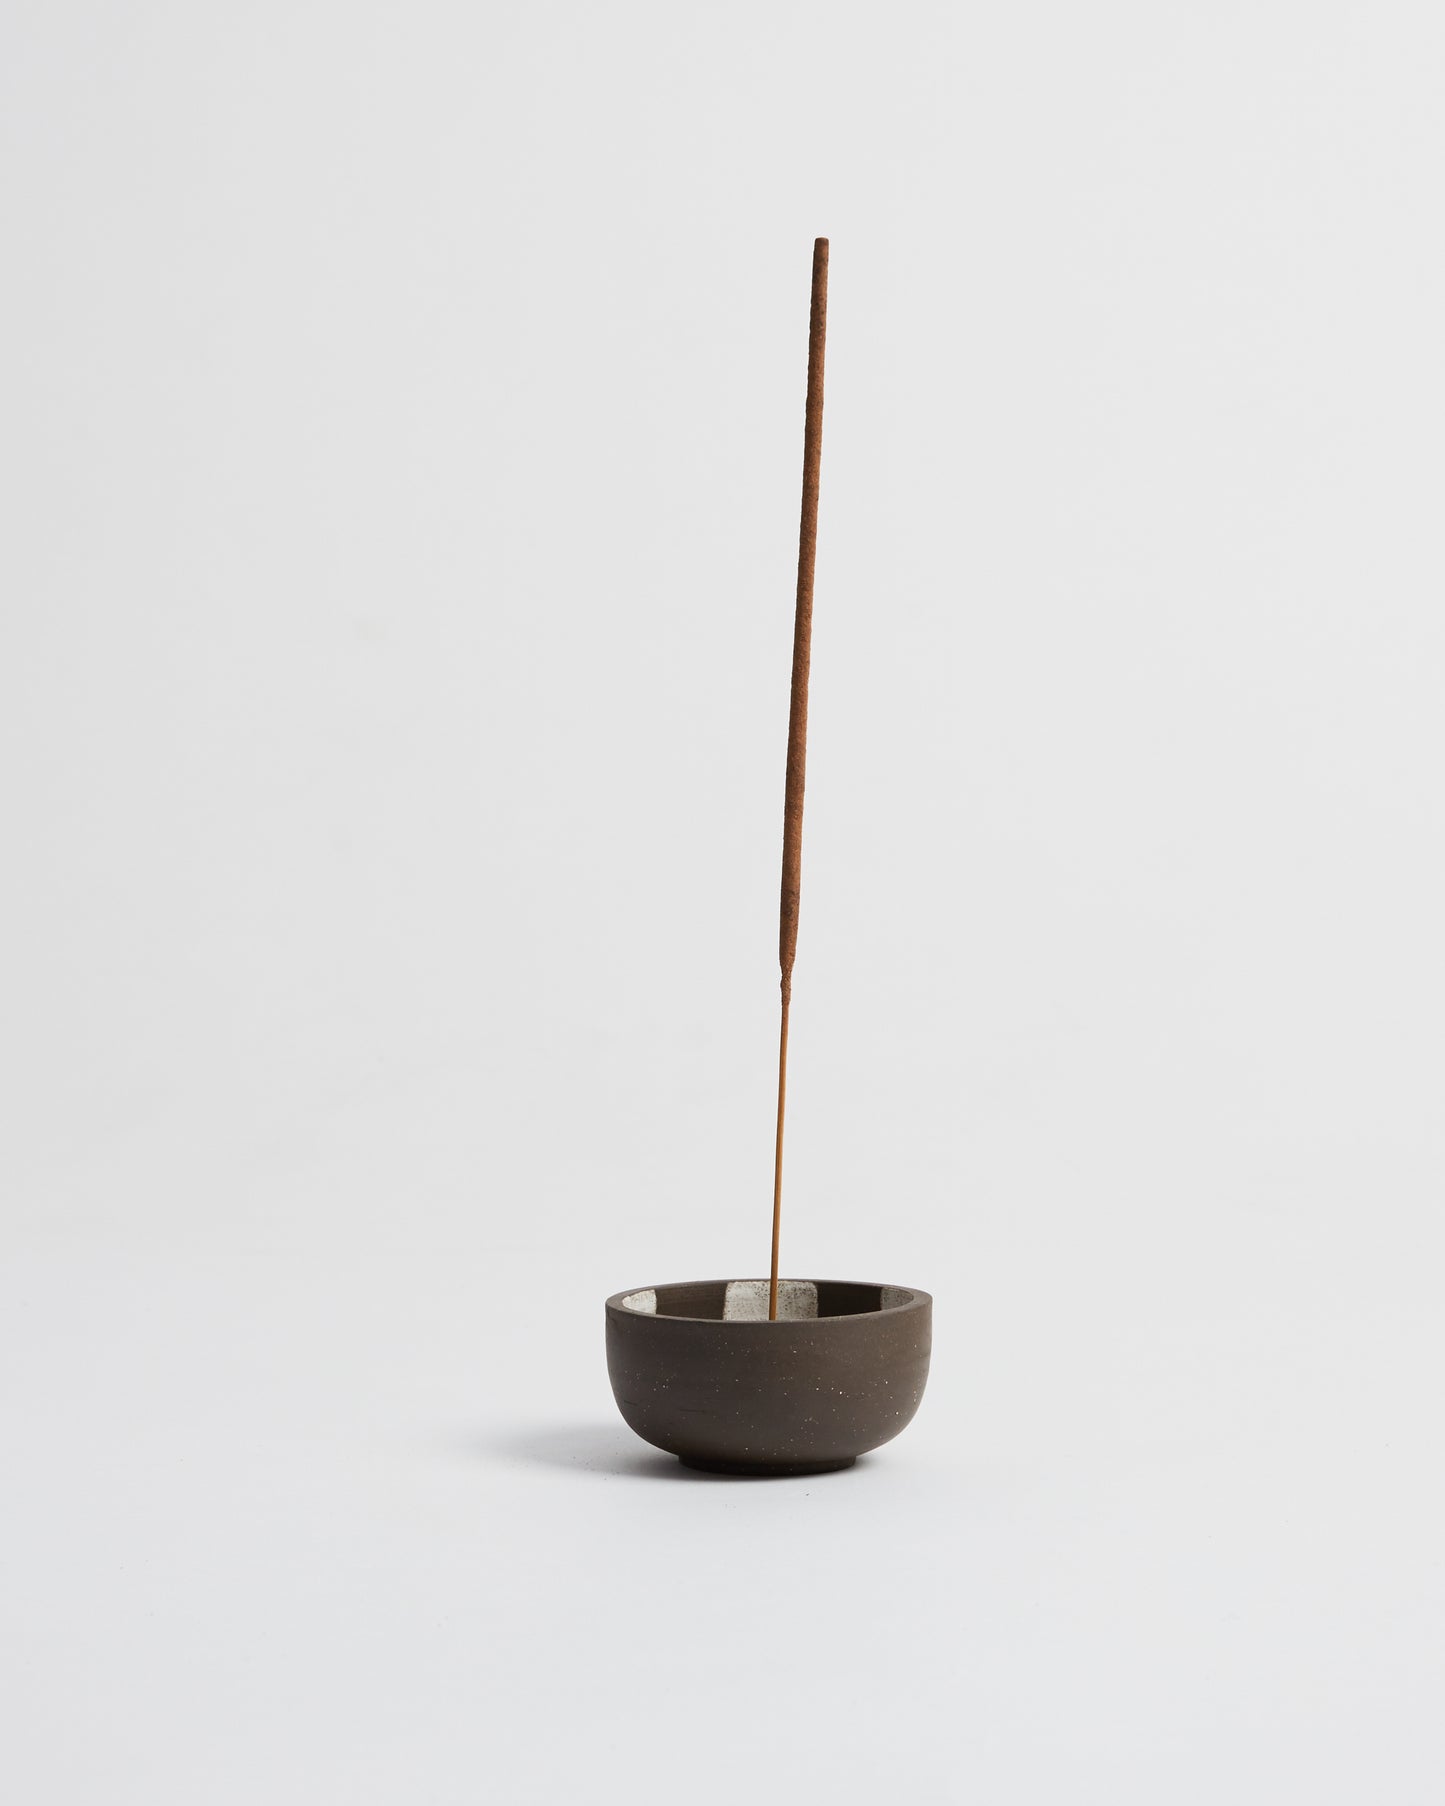 Small Incense Bowl